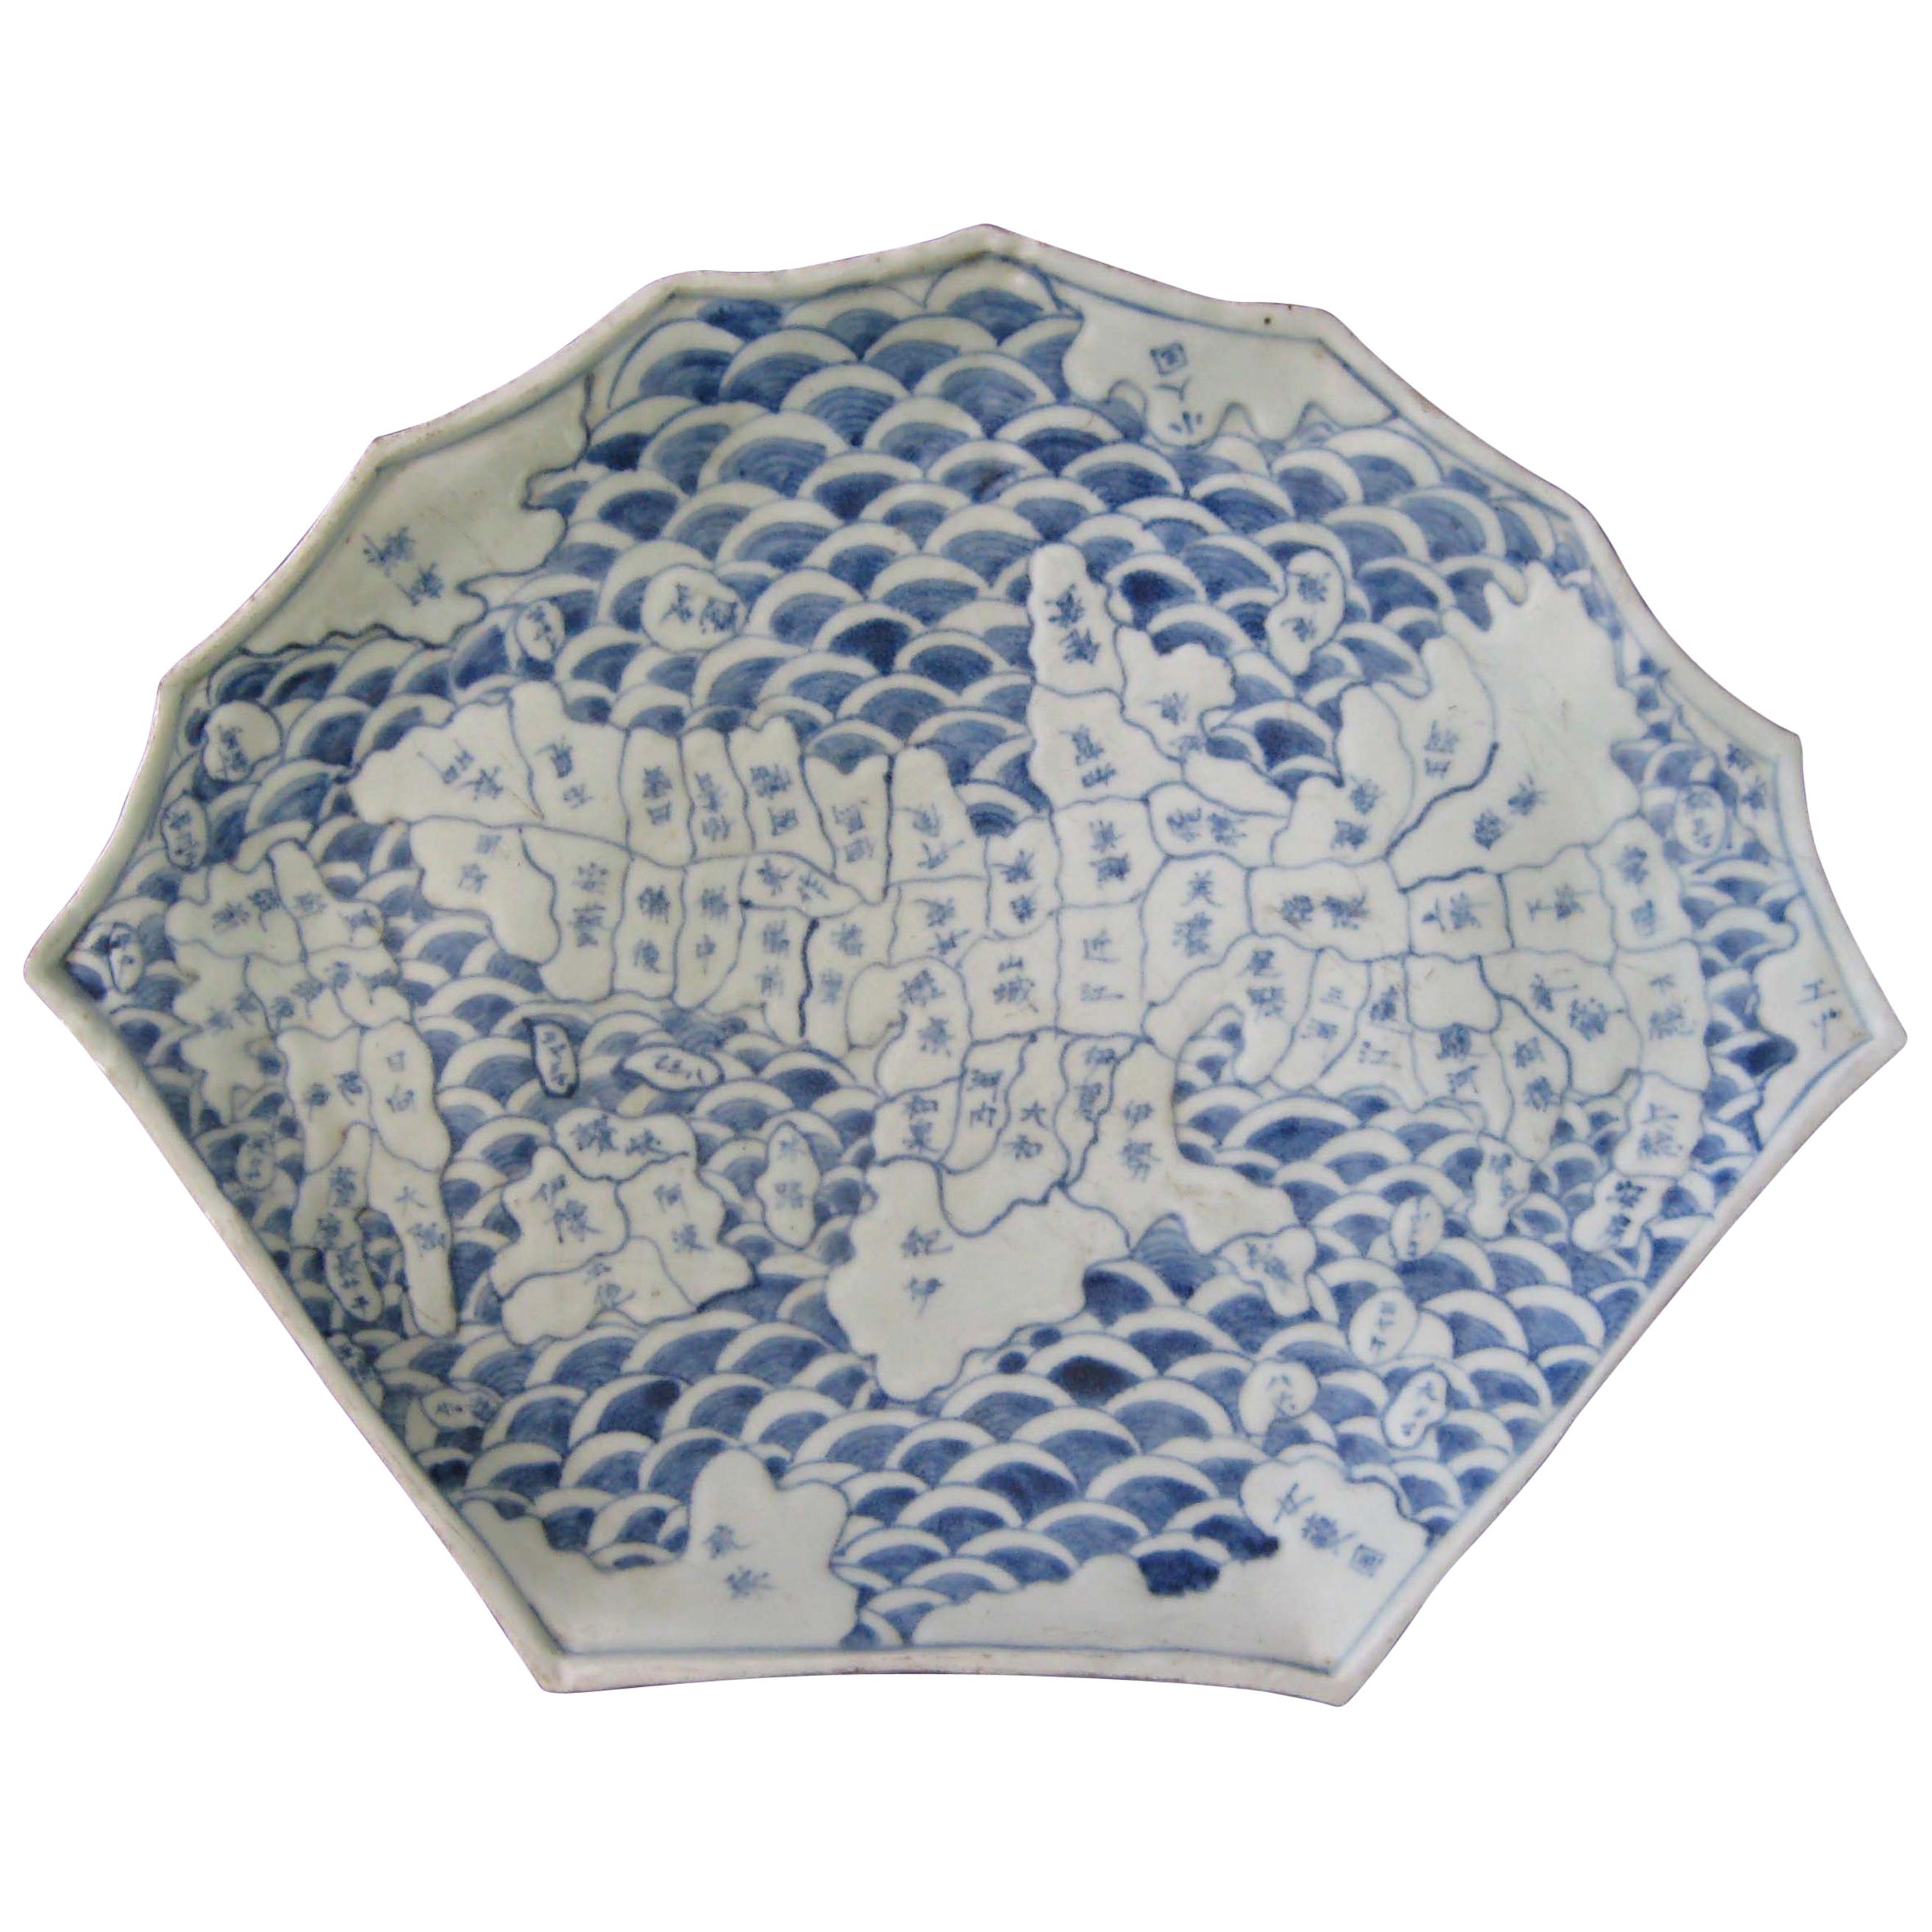 Japanese Arita Blue and White Ceramic Map Dish, circa 1840